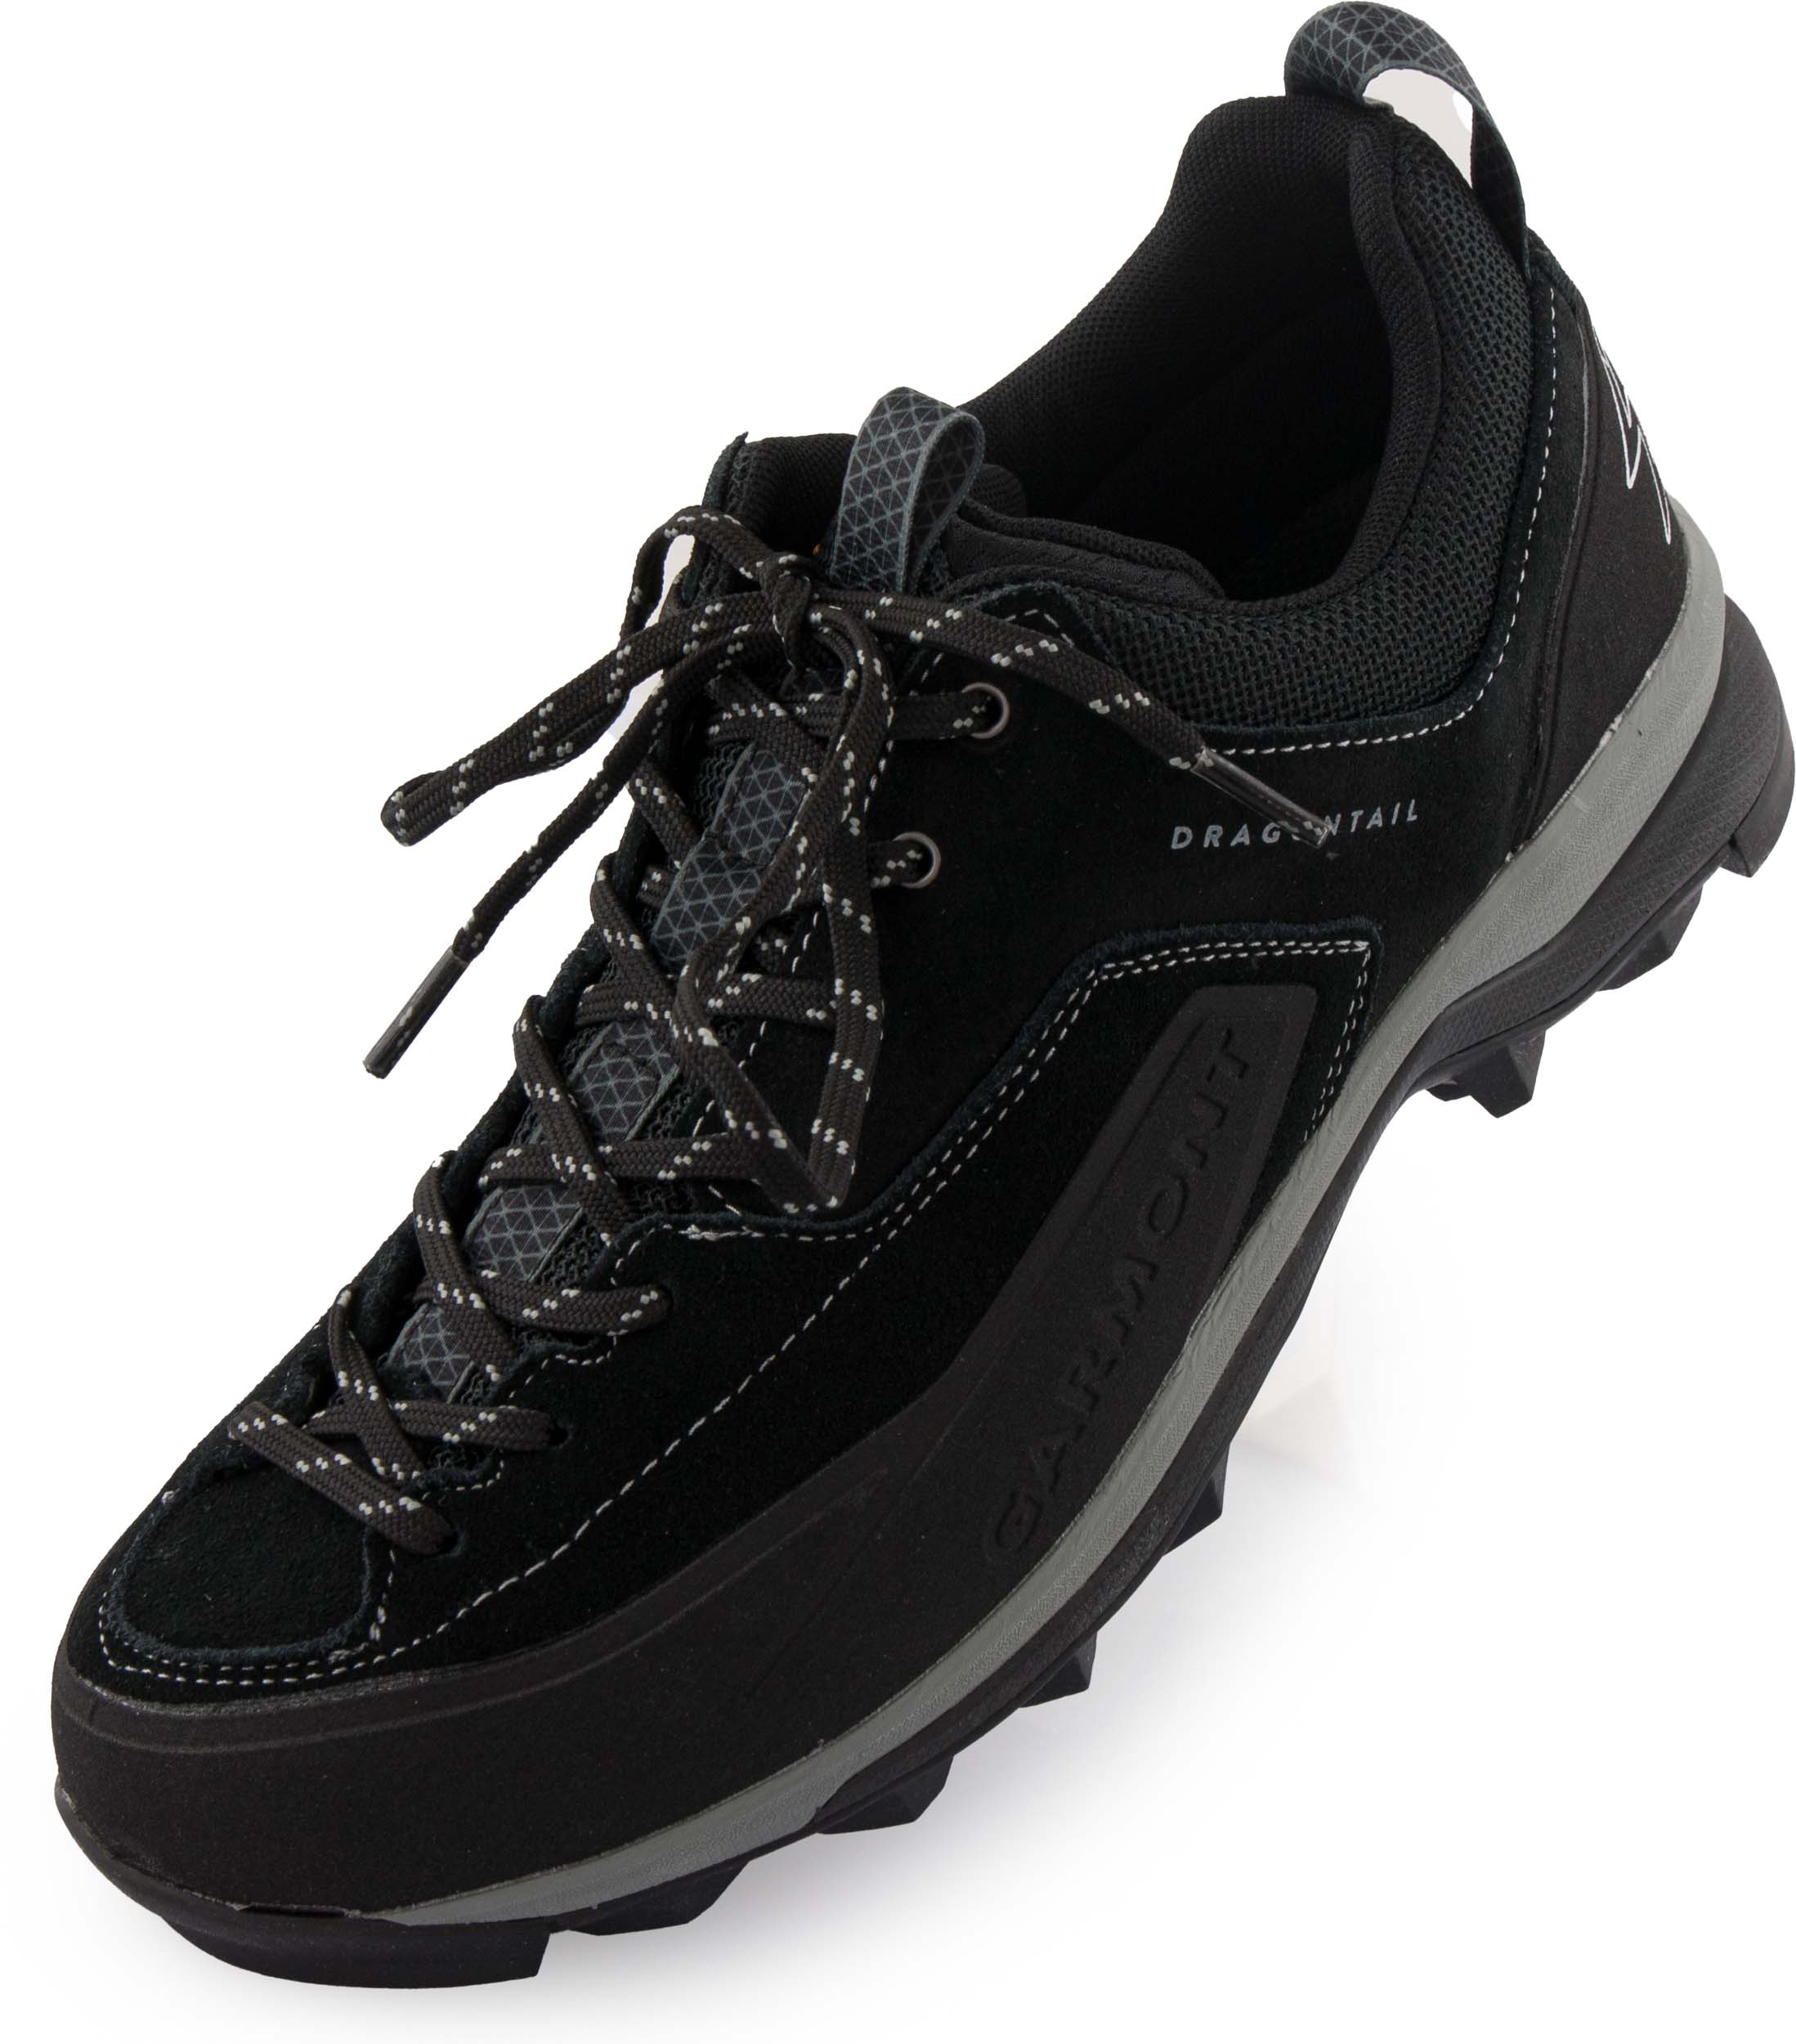 Outdoorová obuv Garmont Men Dragontail Black|44,5